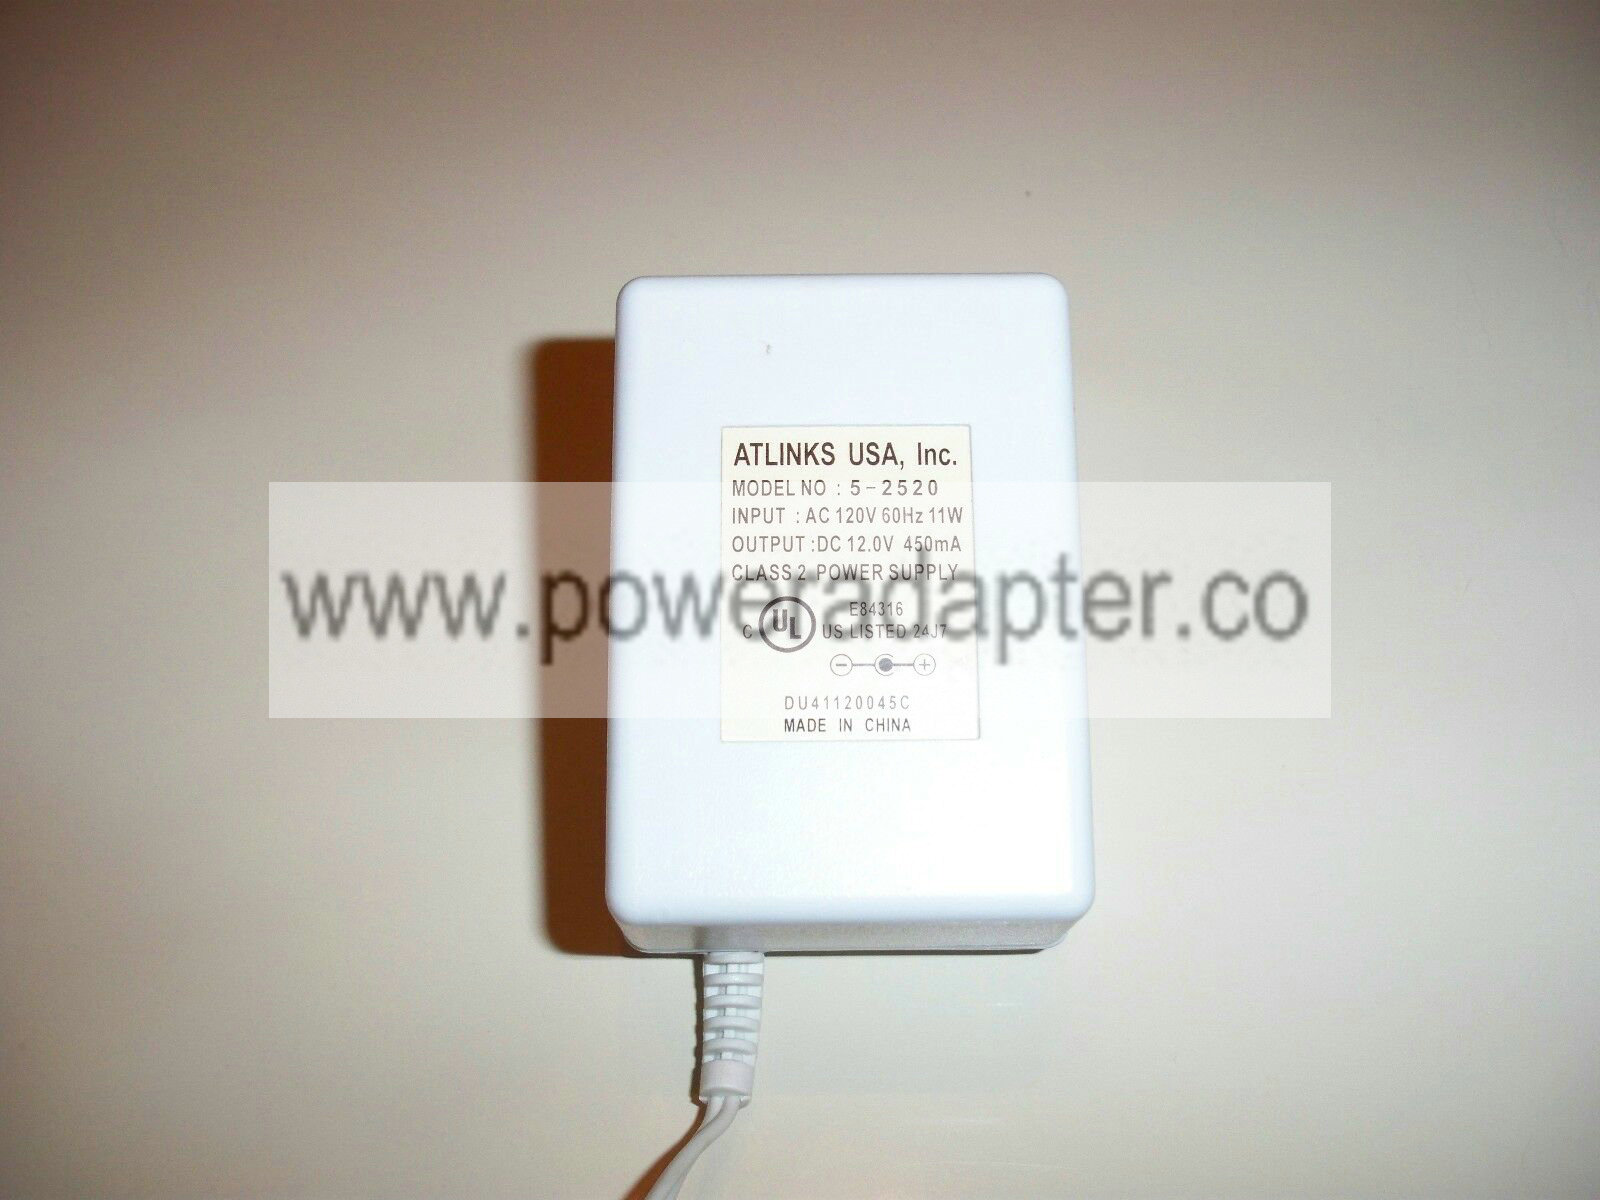 Atlinks Power Adapter Model 5-2520 12V DC 450mA Brand: ATLINKS USA, Inc. MPN: 5-2520 Model: 5-2520 Output Voltage: